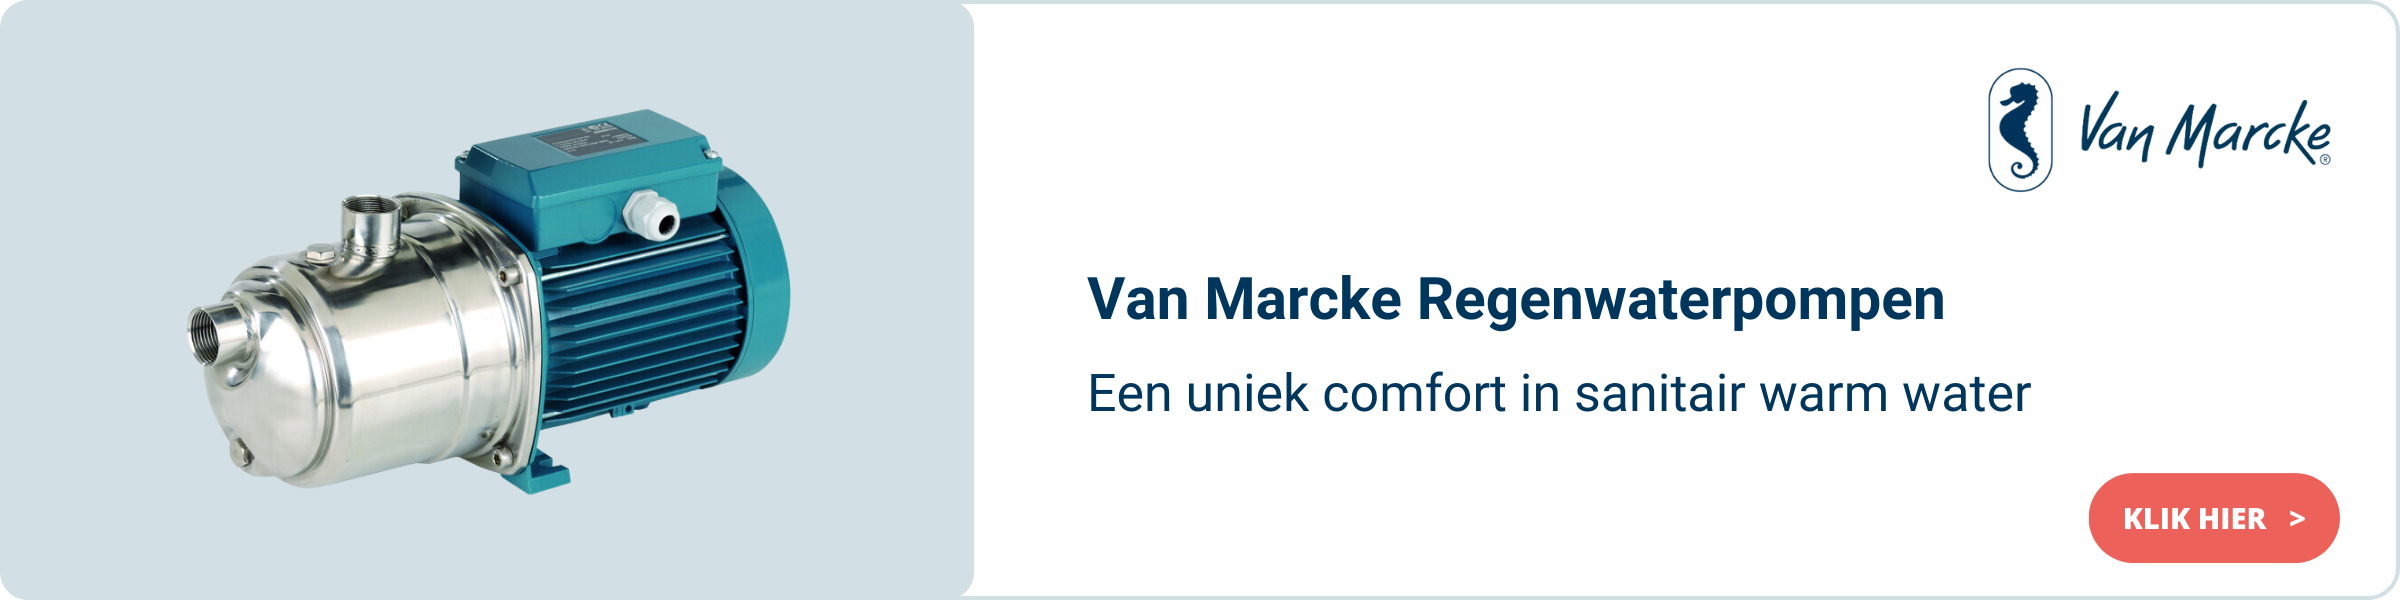 VM regenwaterpomp NL.png